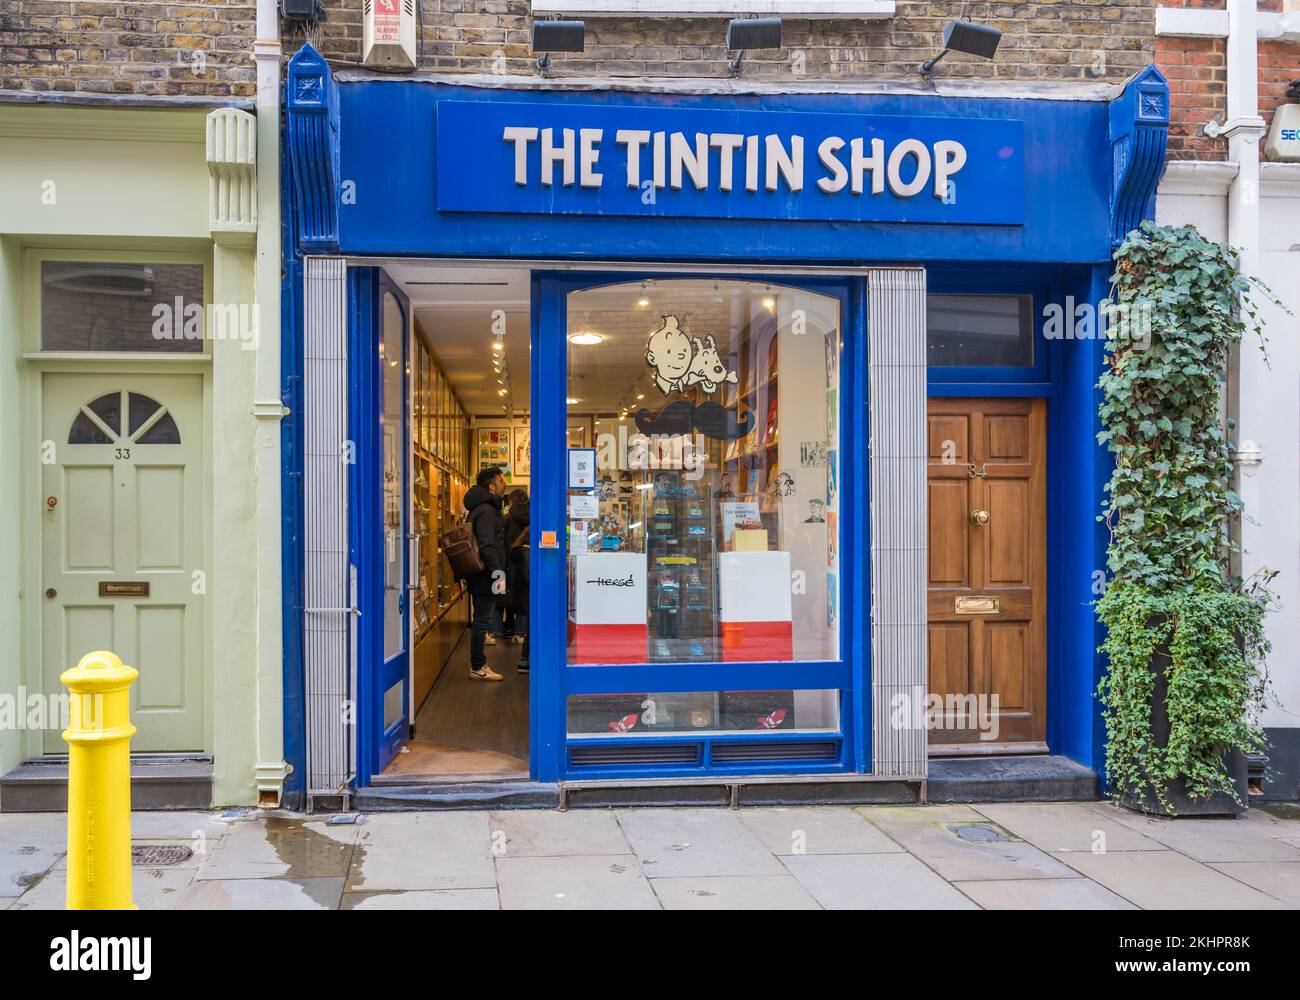 Tintin shop london hi-res stock photography and images - Alamy